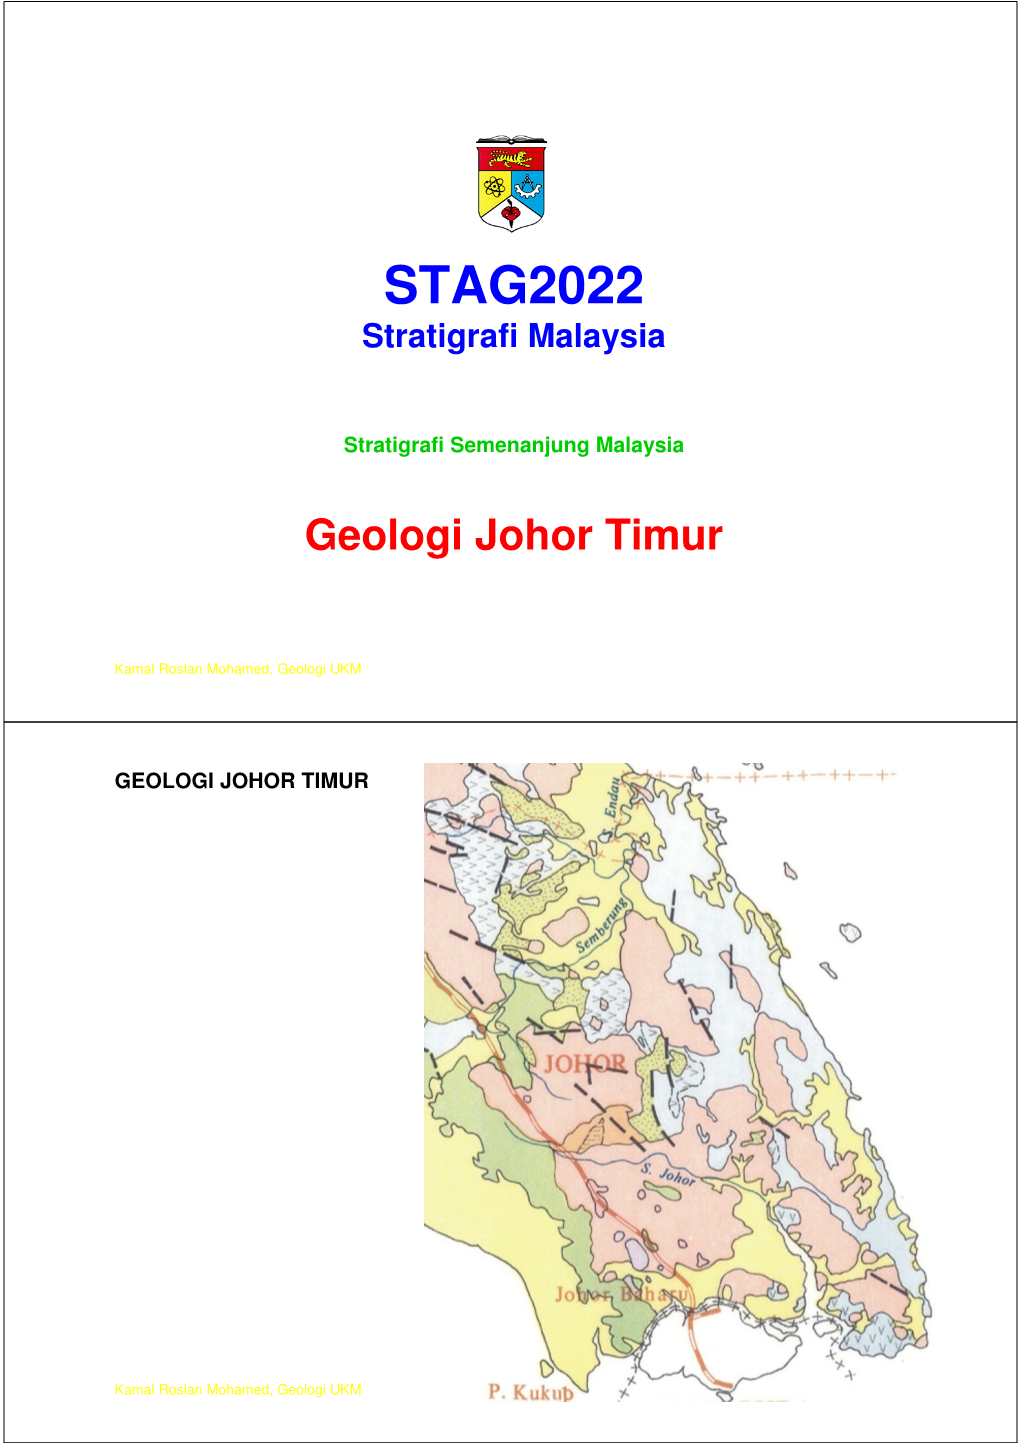 Geologi Johor Timur